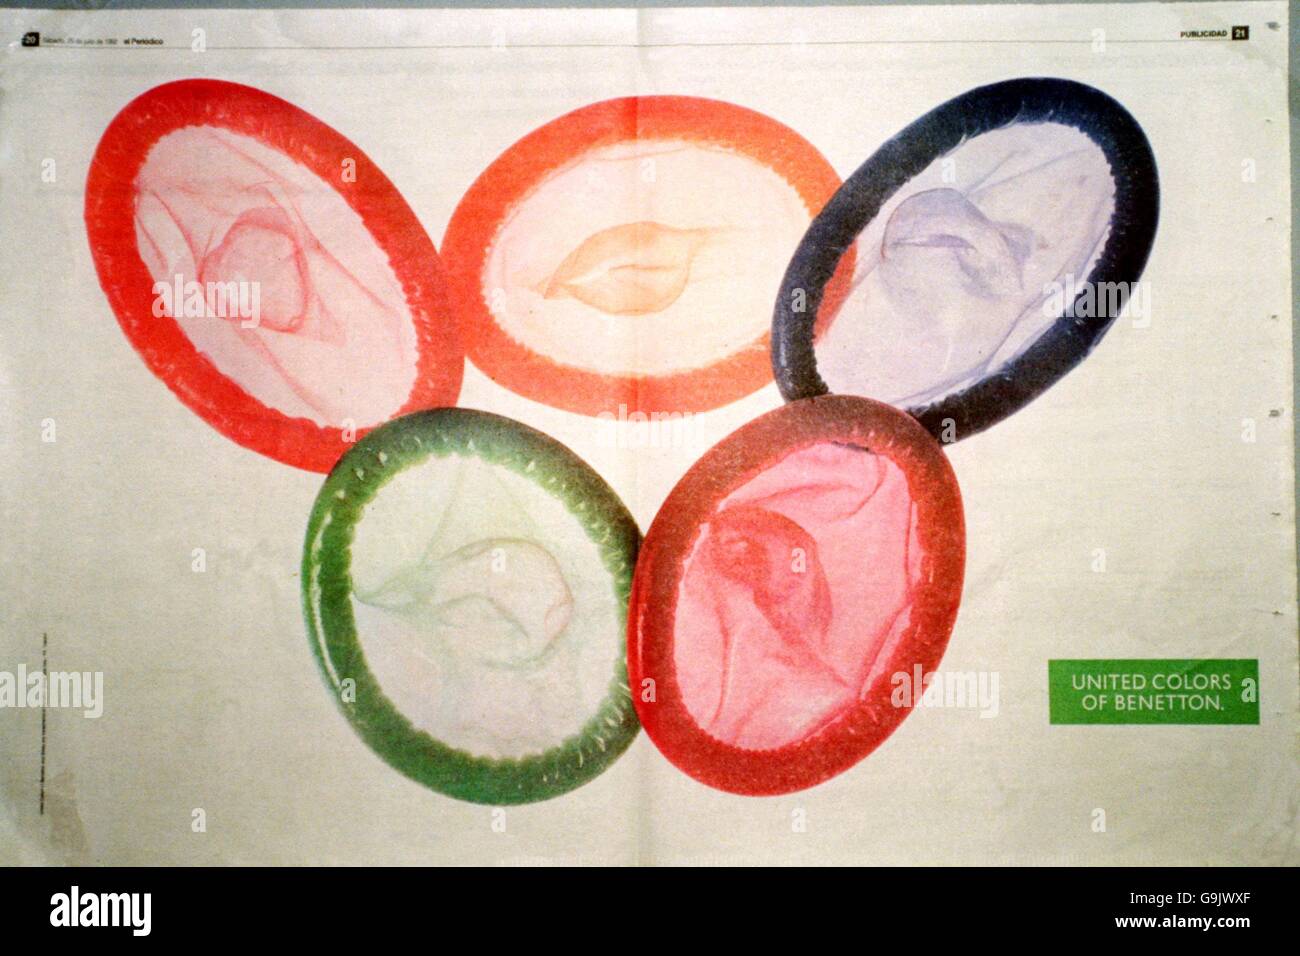 OLYMPICS BENNETON BARCELONA. THE BENNETON CONDOM ADVERT AT THE OLYMPICS. Stock Photo